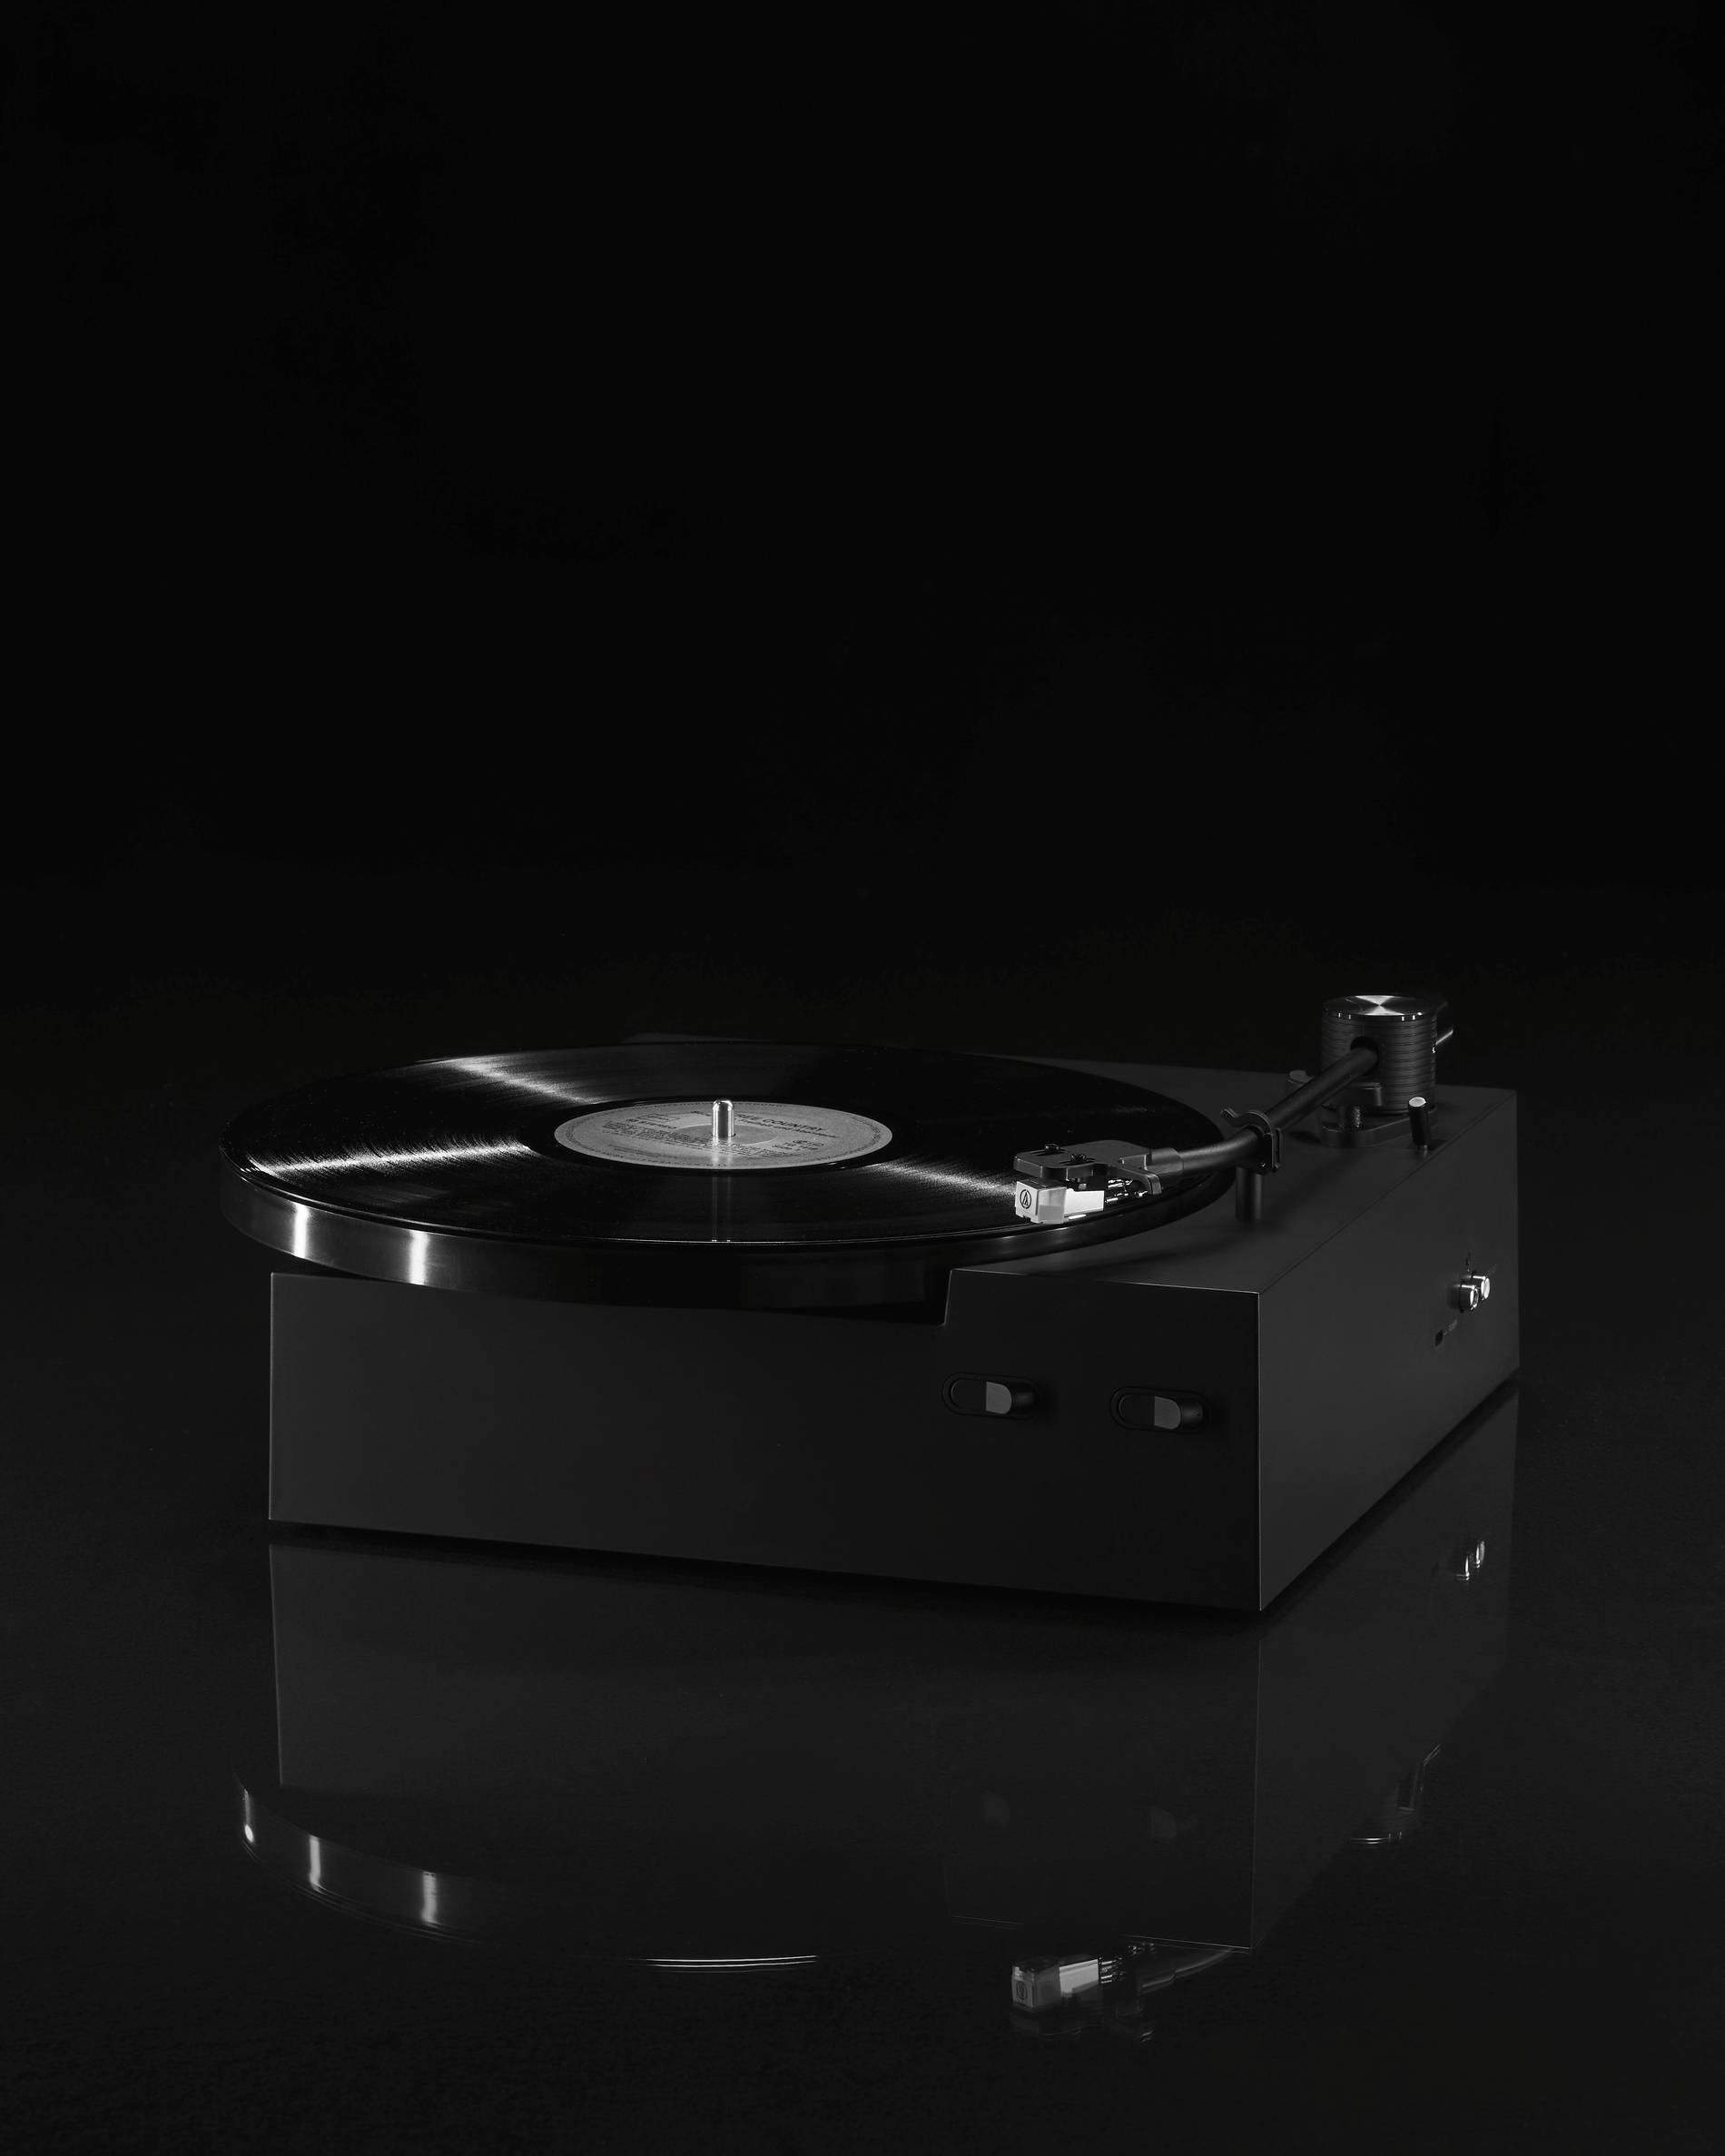 Swedish House Mafia for Ikea, Obergränsad collection record player design